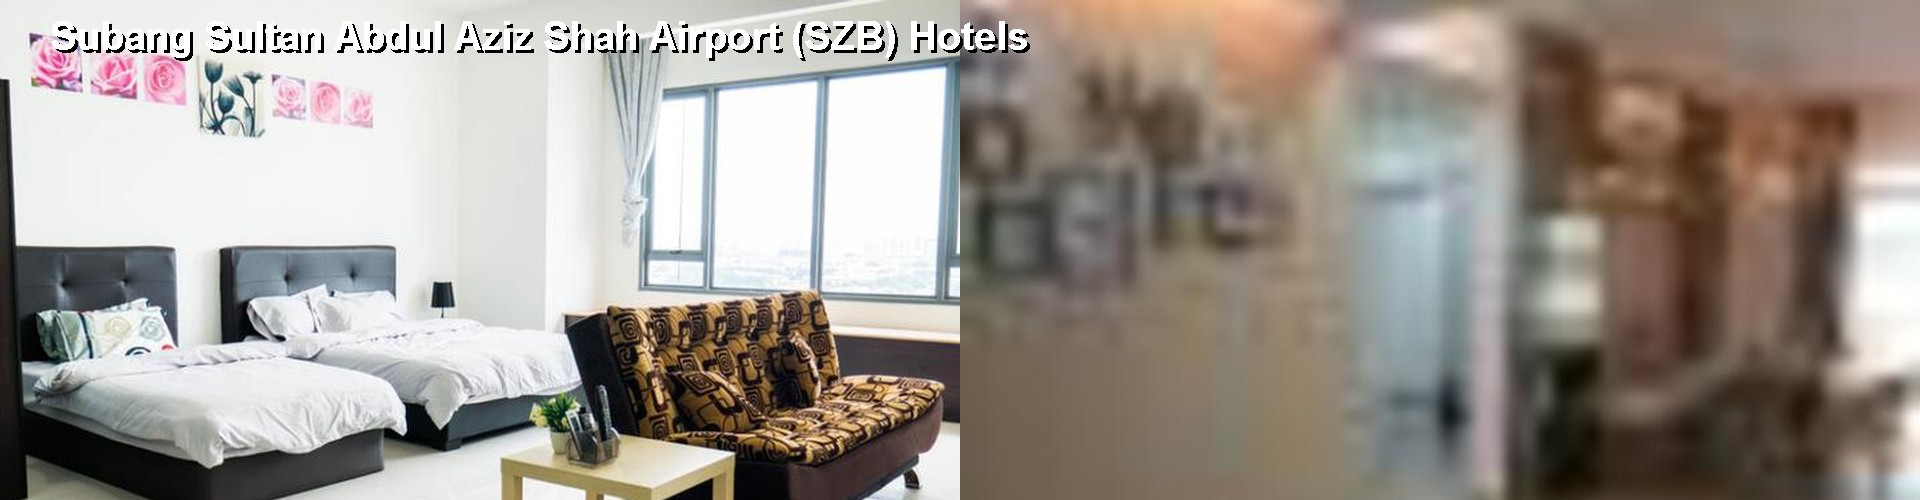 5 Best Hotels near Subang Sultan Abdul Aziz Shah Airport (SZB)